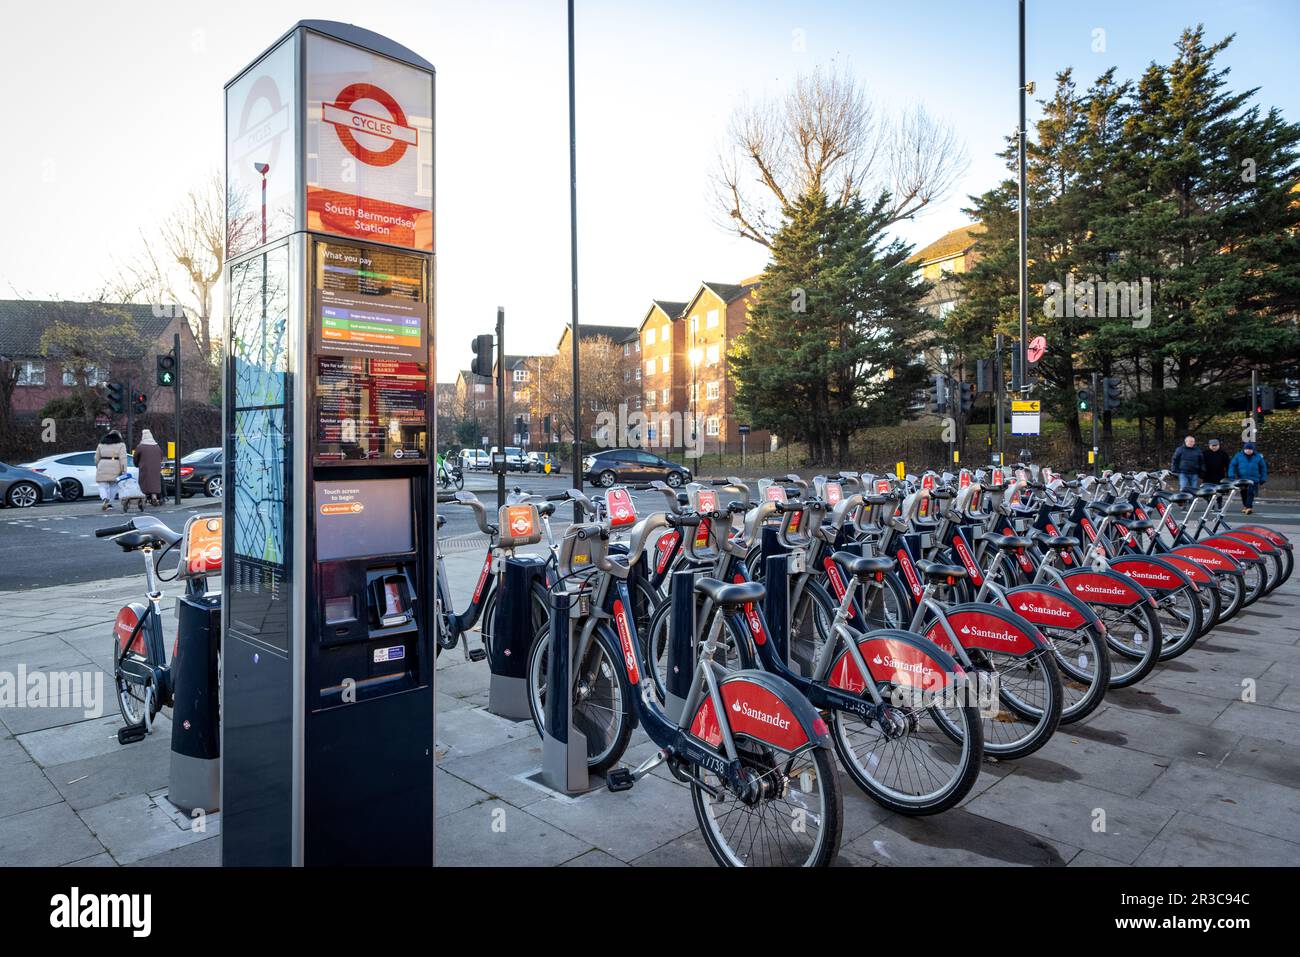 Santander cycles South Bermondsey station d'accueil. Banque D'Images